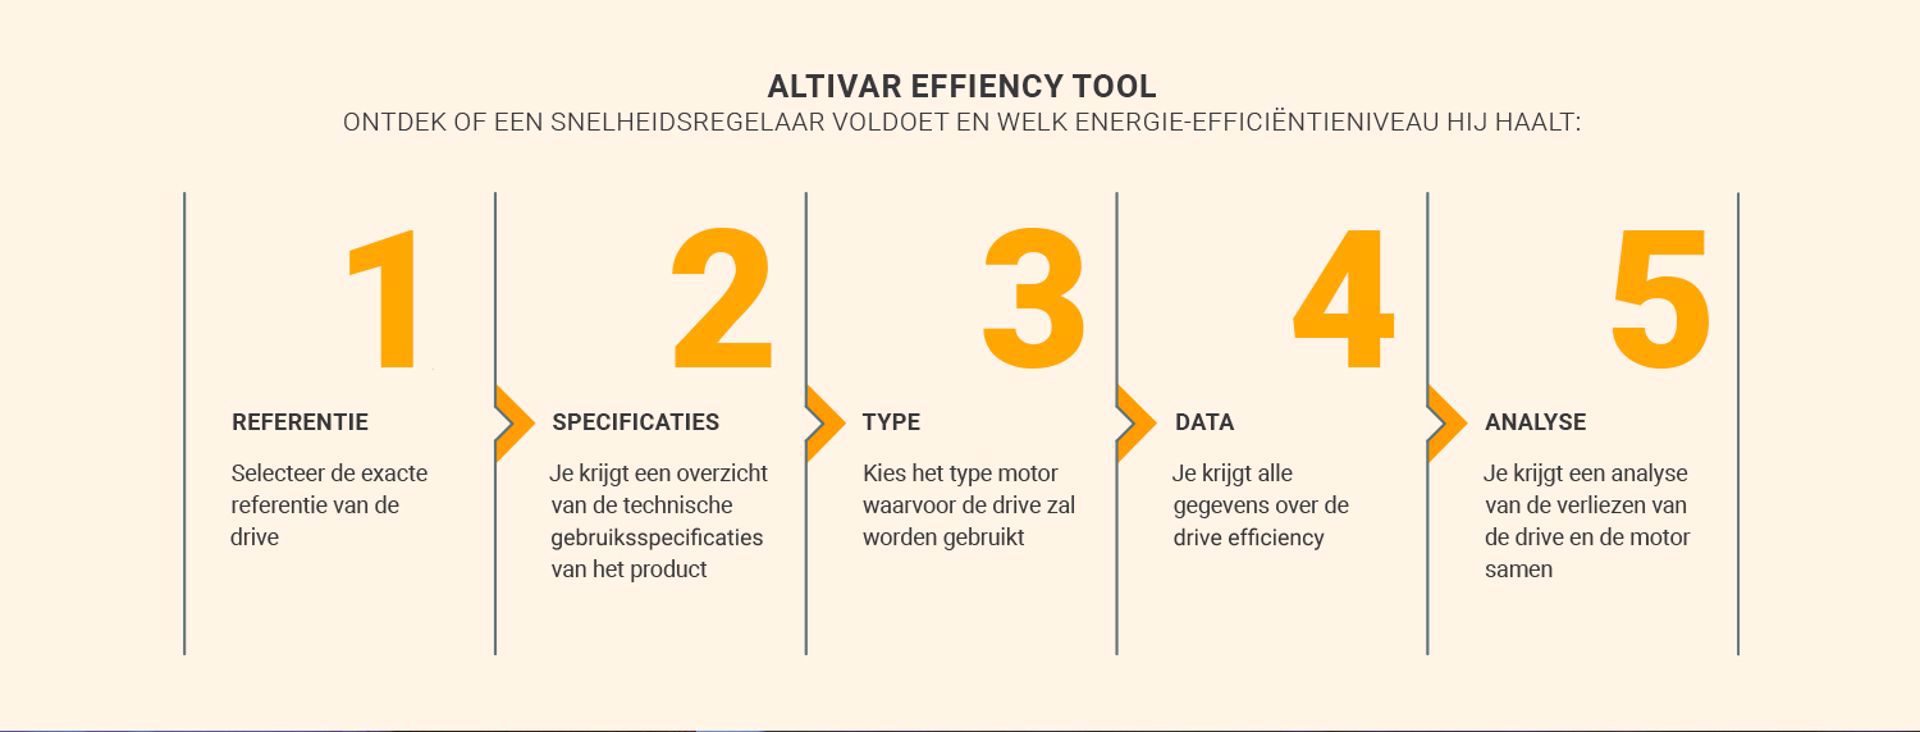 Altivar Efficiency Tool - 5 stappen